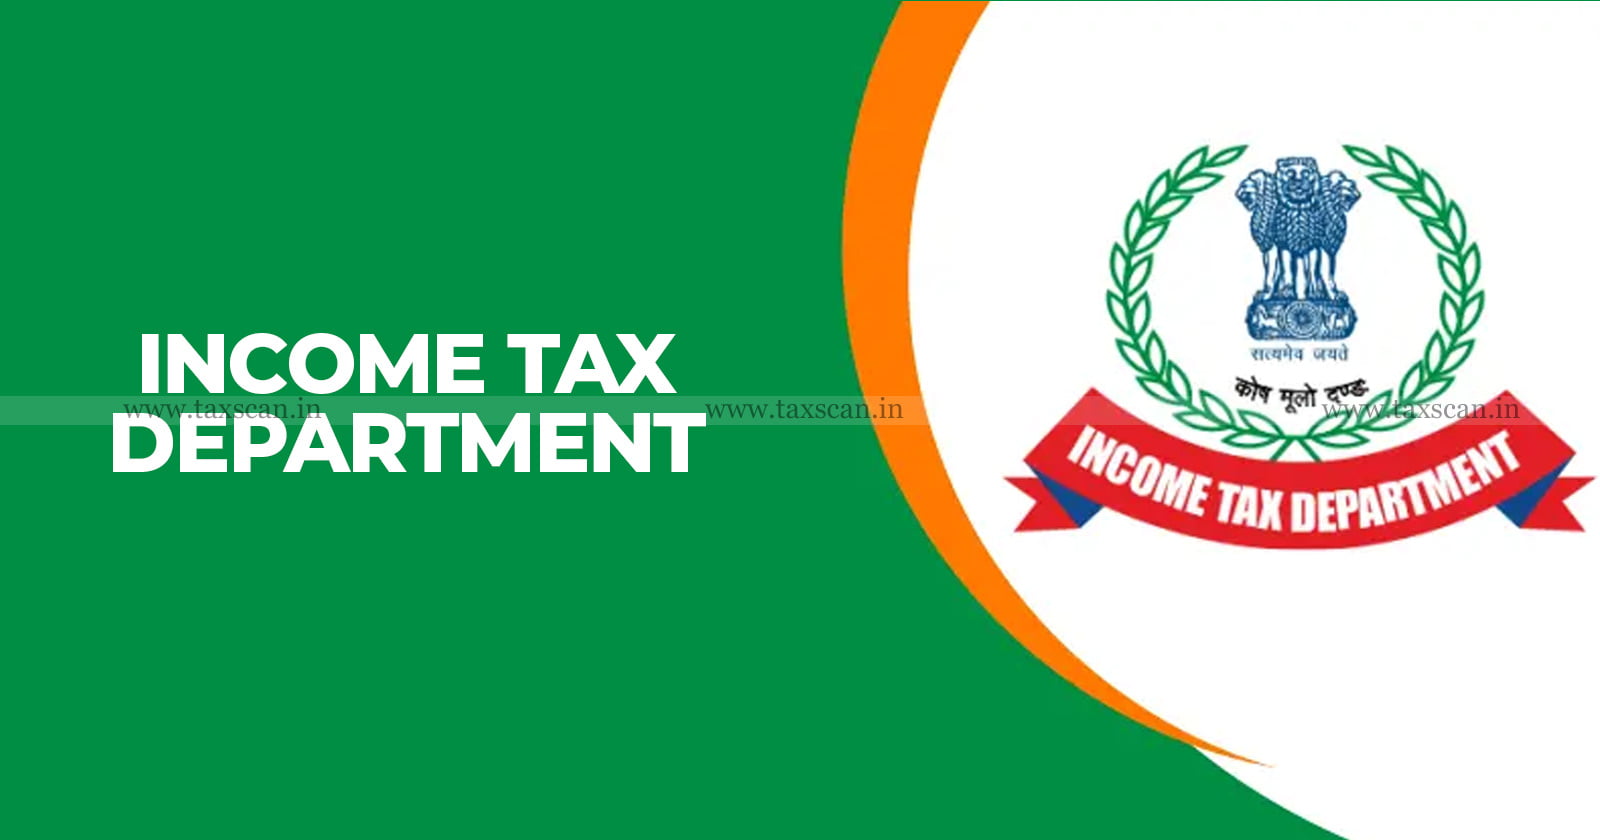 Direct Tax - Corresponding Period - income tax department - income tax - tax - taxscan